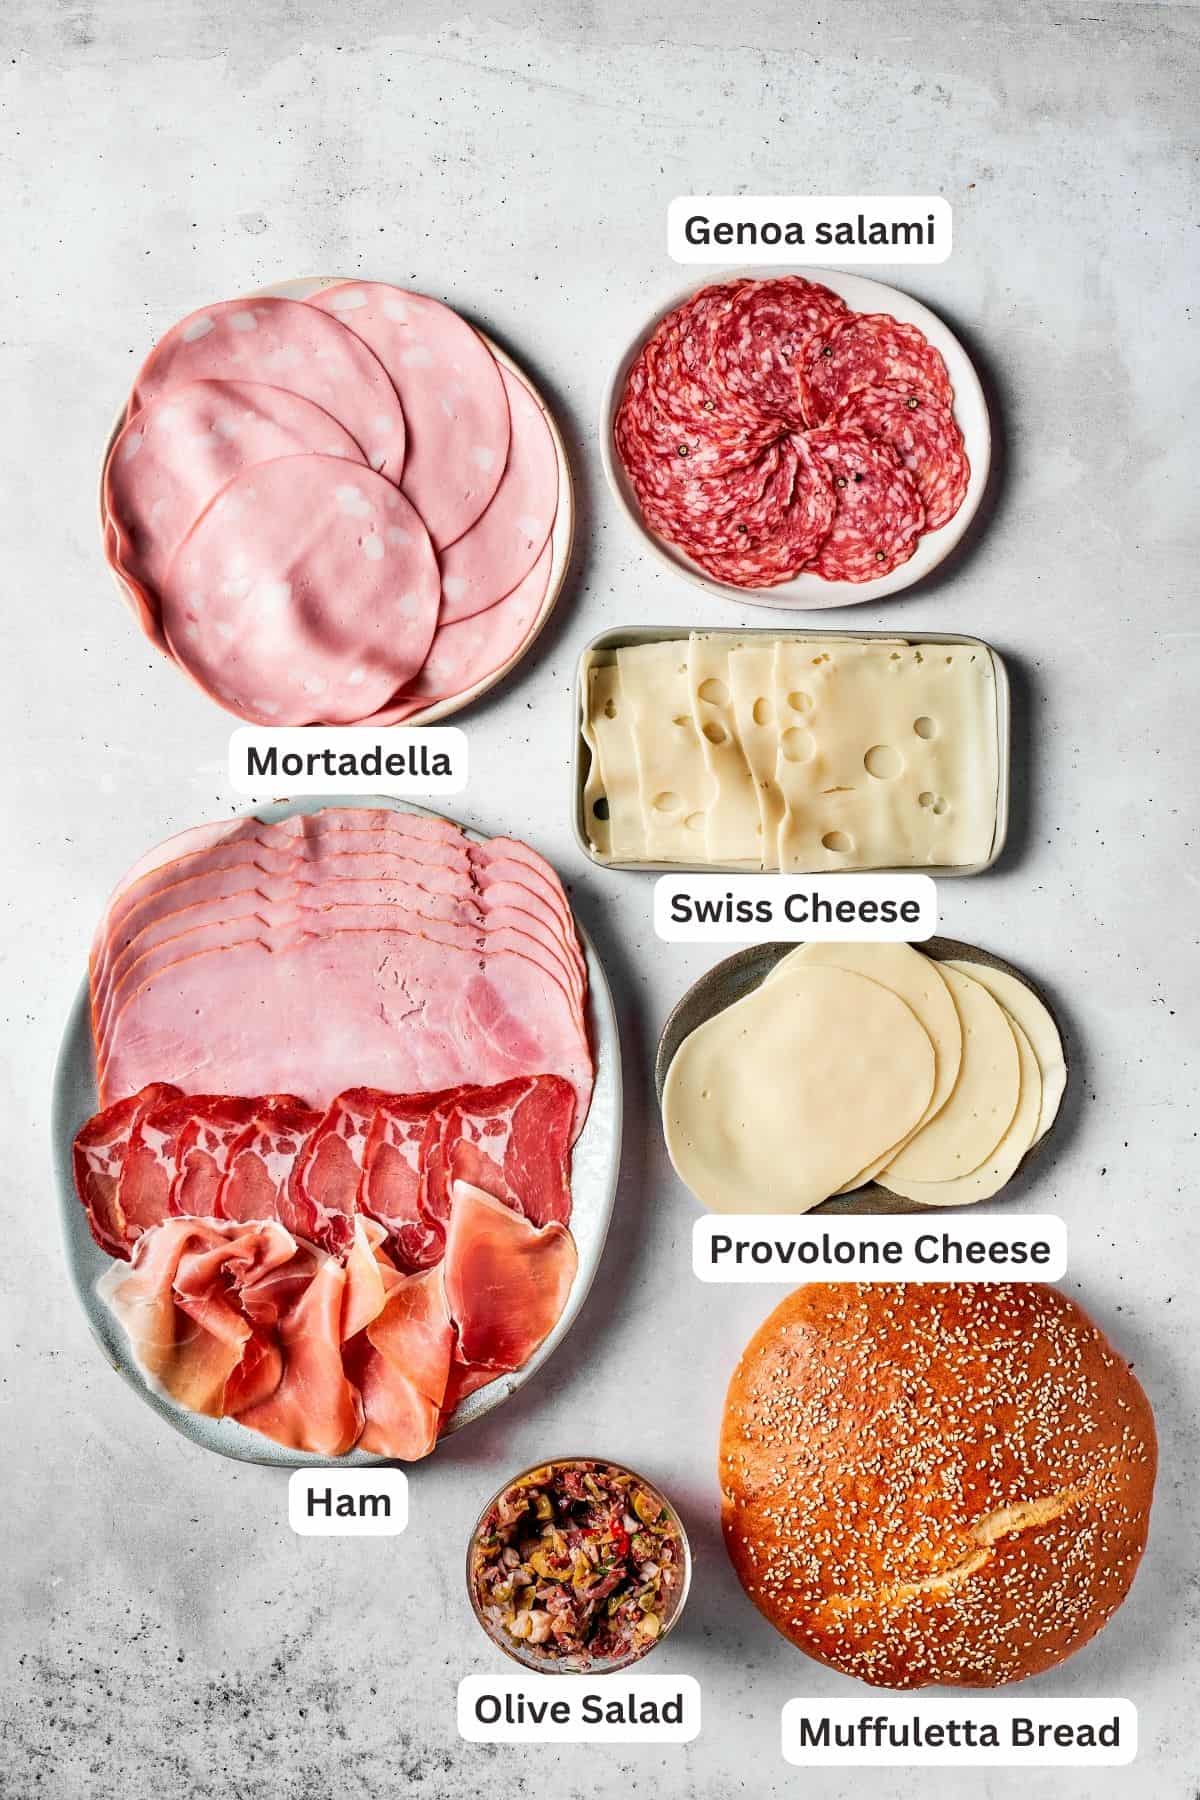 Muffaletta sandwich ingredients are shown: mortadella, salami, ham, proscitto, Swiss cheese, Provolone cheese, olive salad.